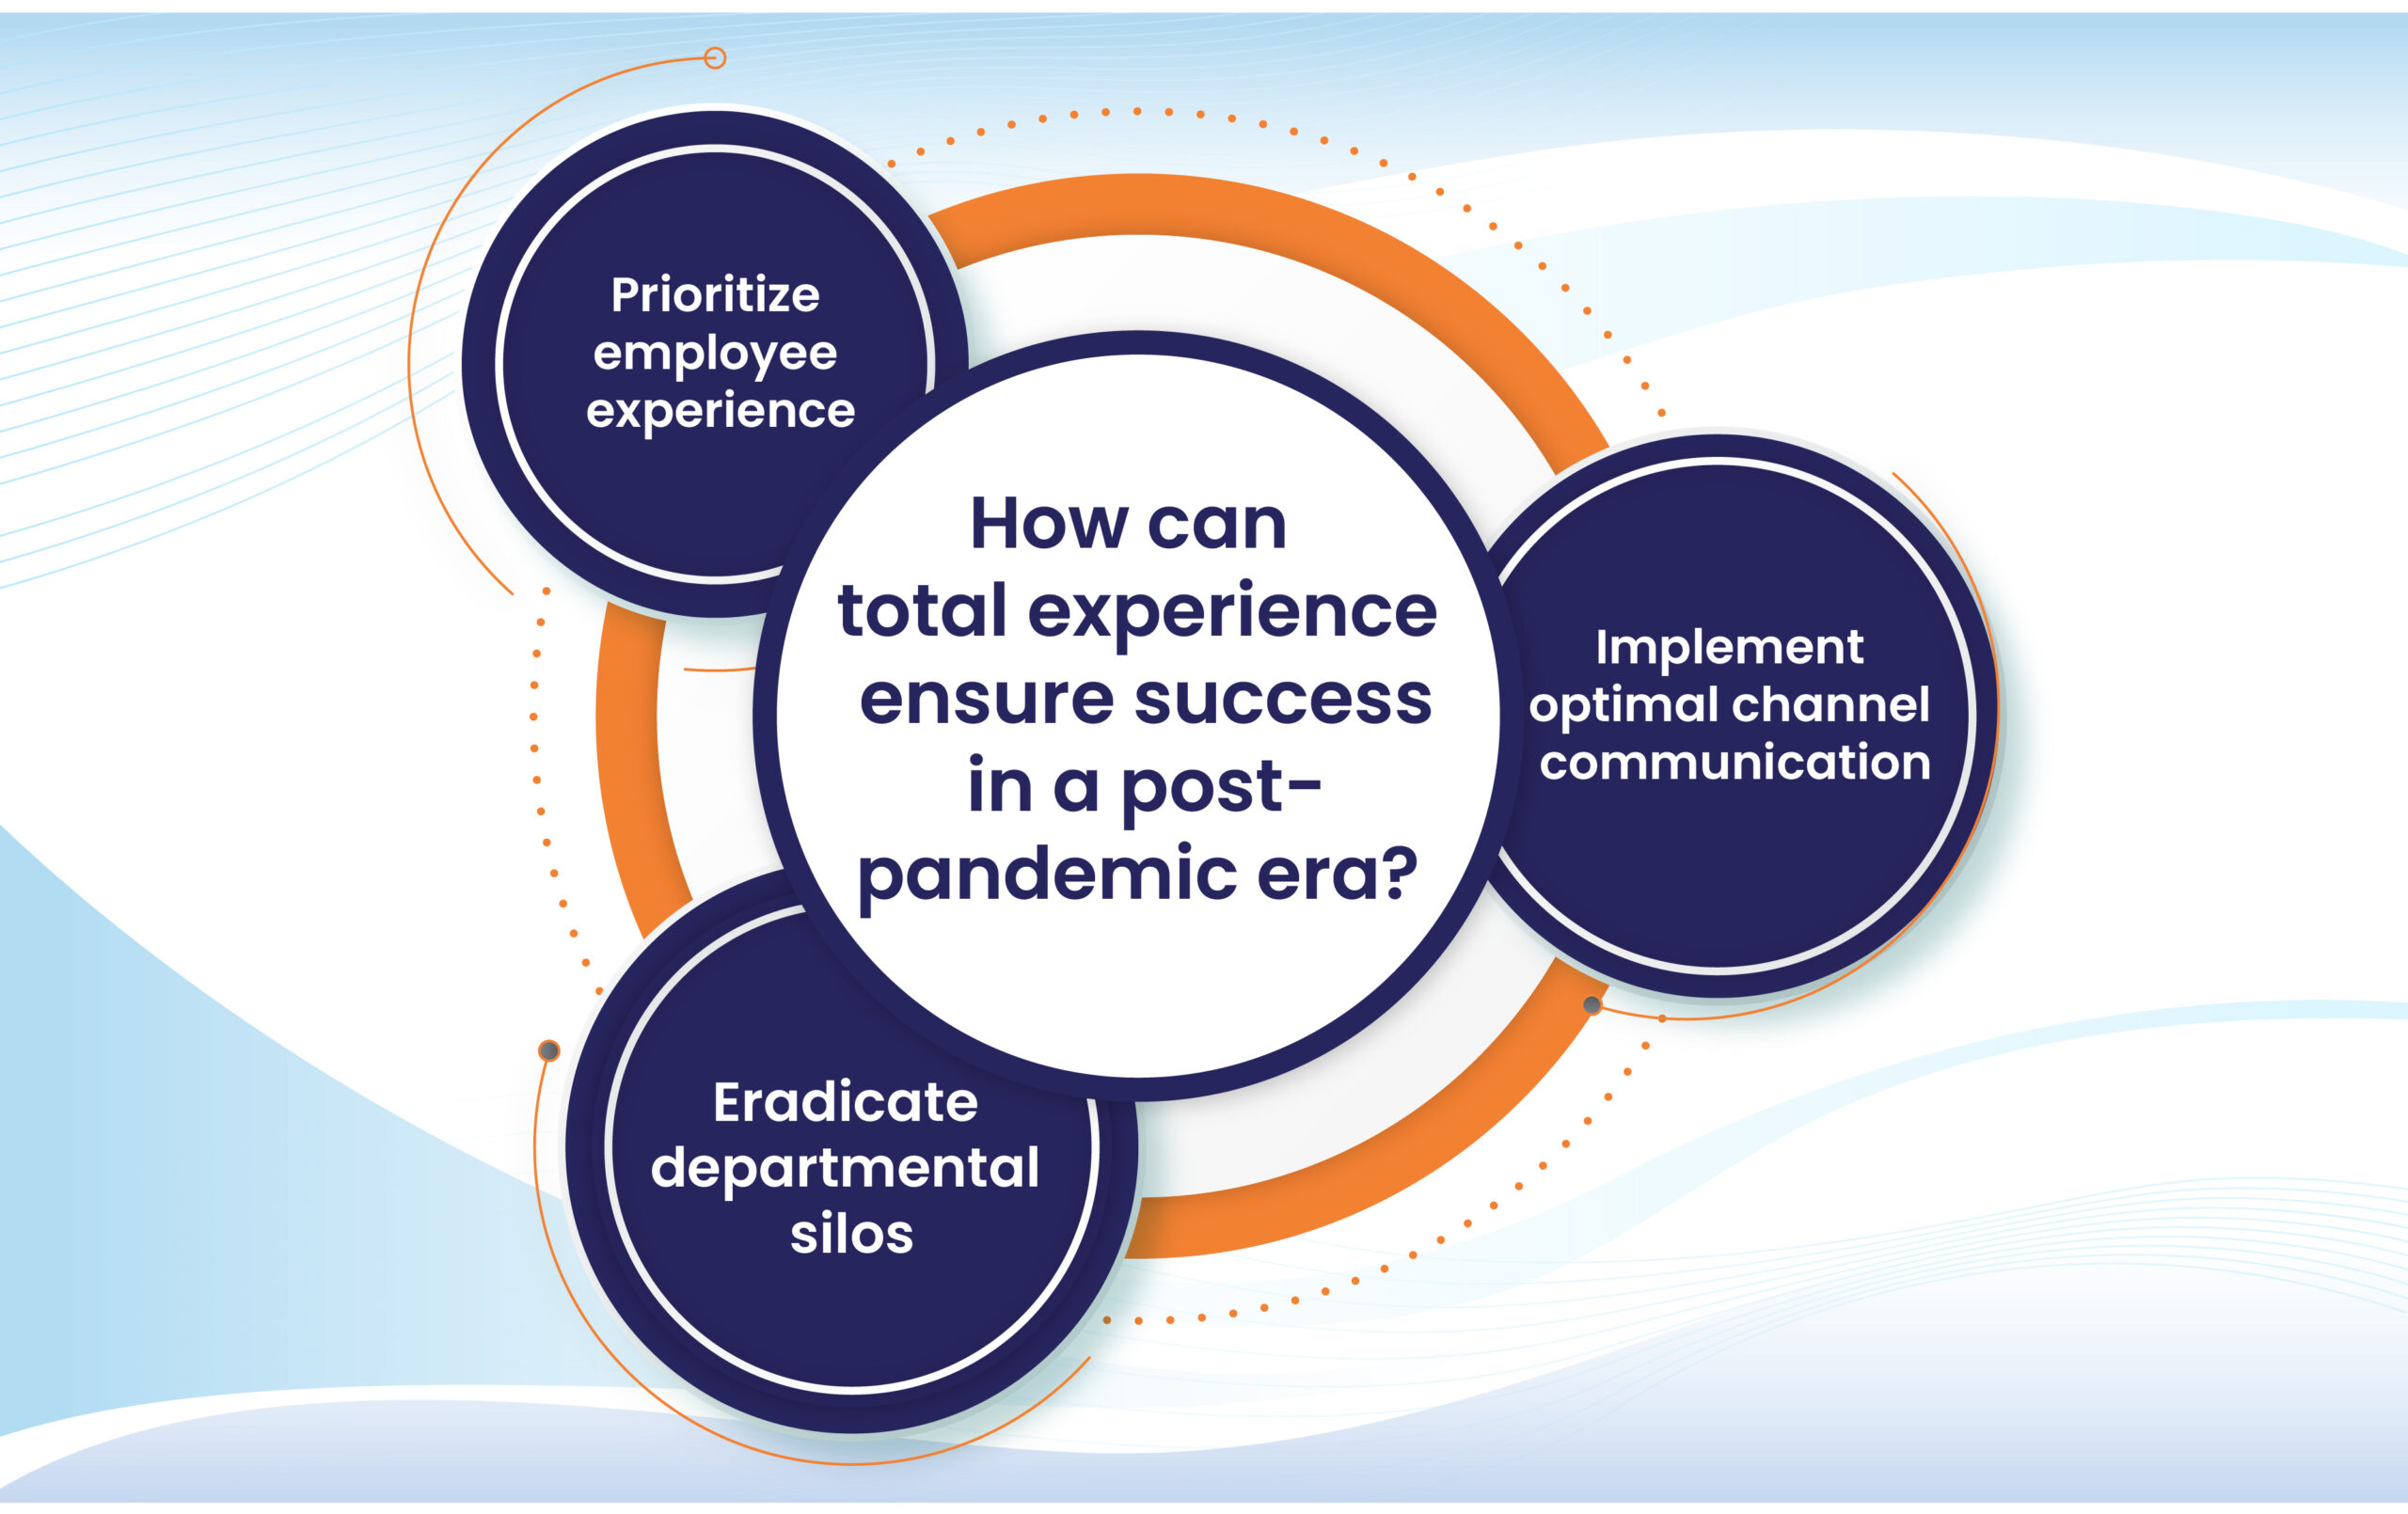 Experience ensure success in a post-pandemic era